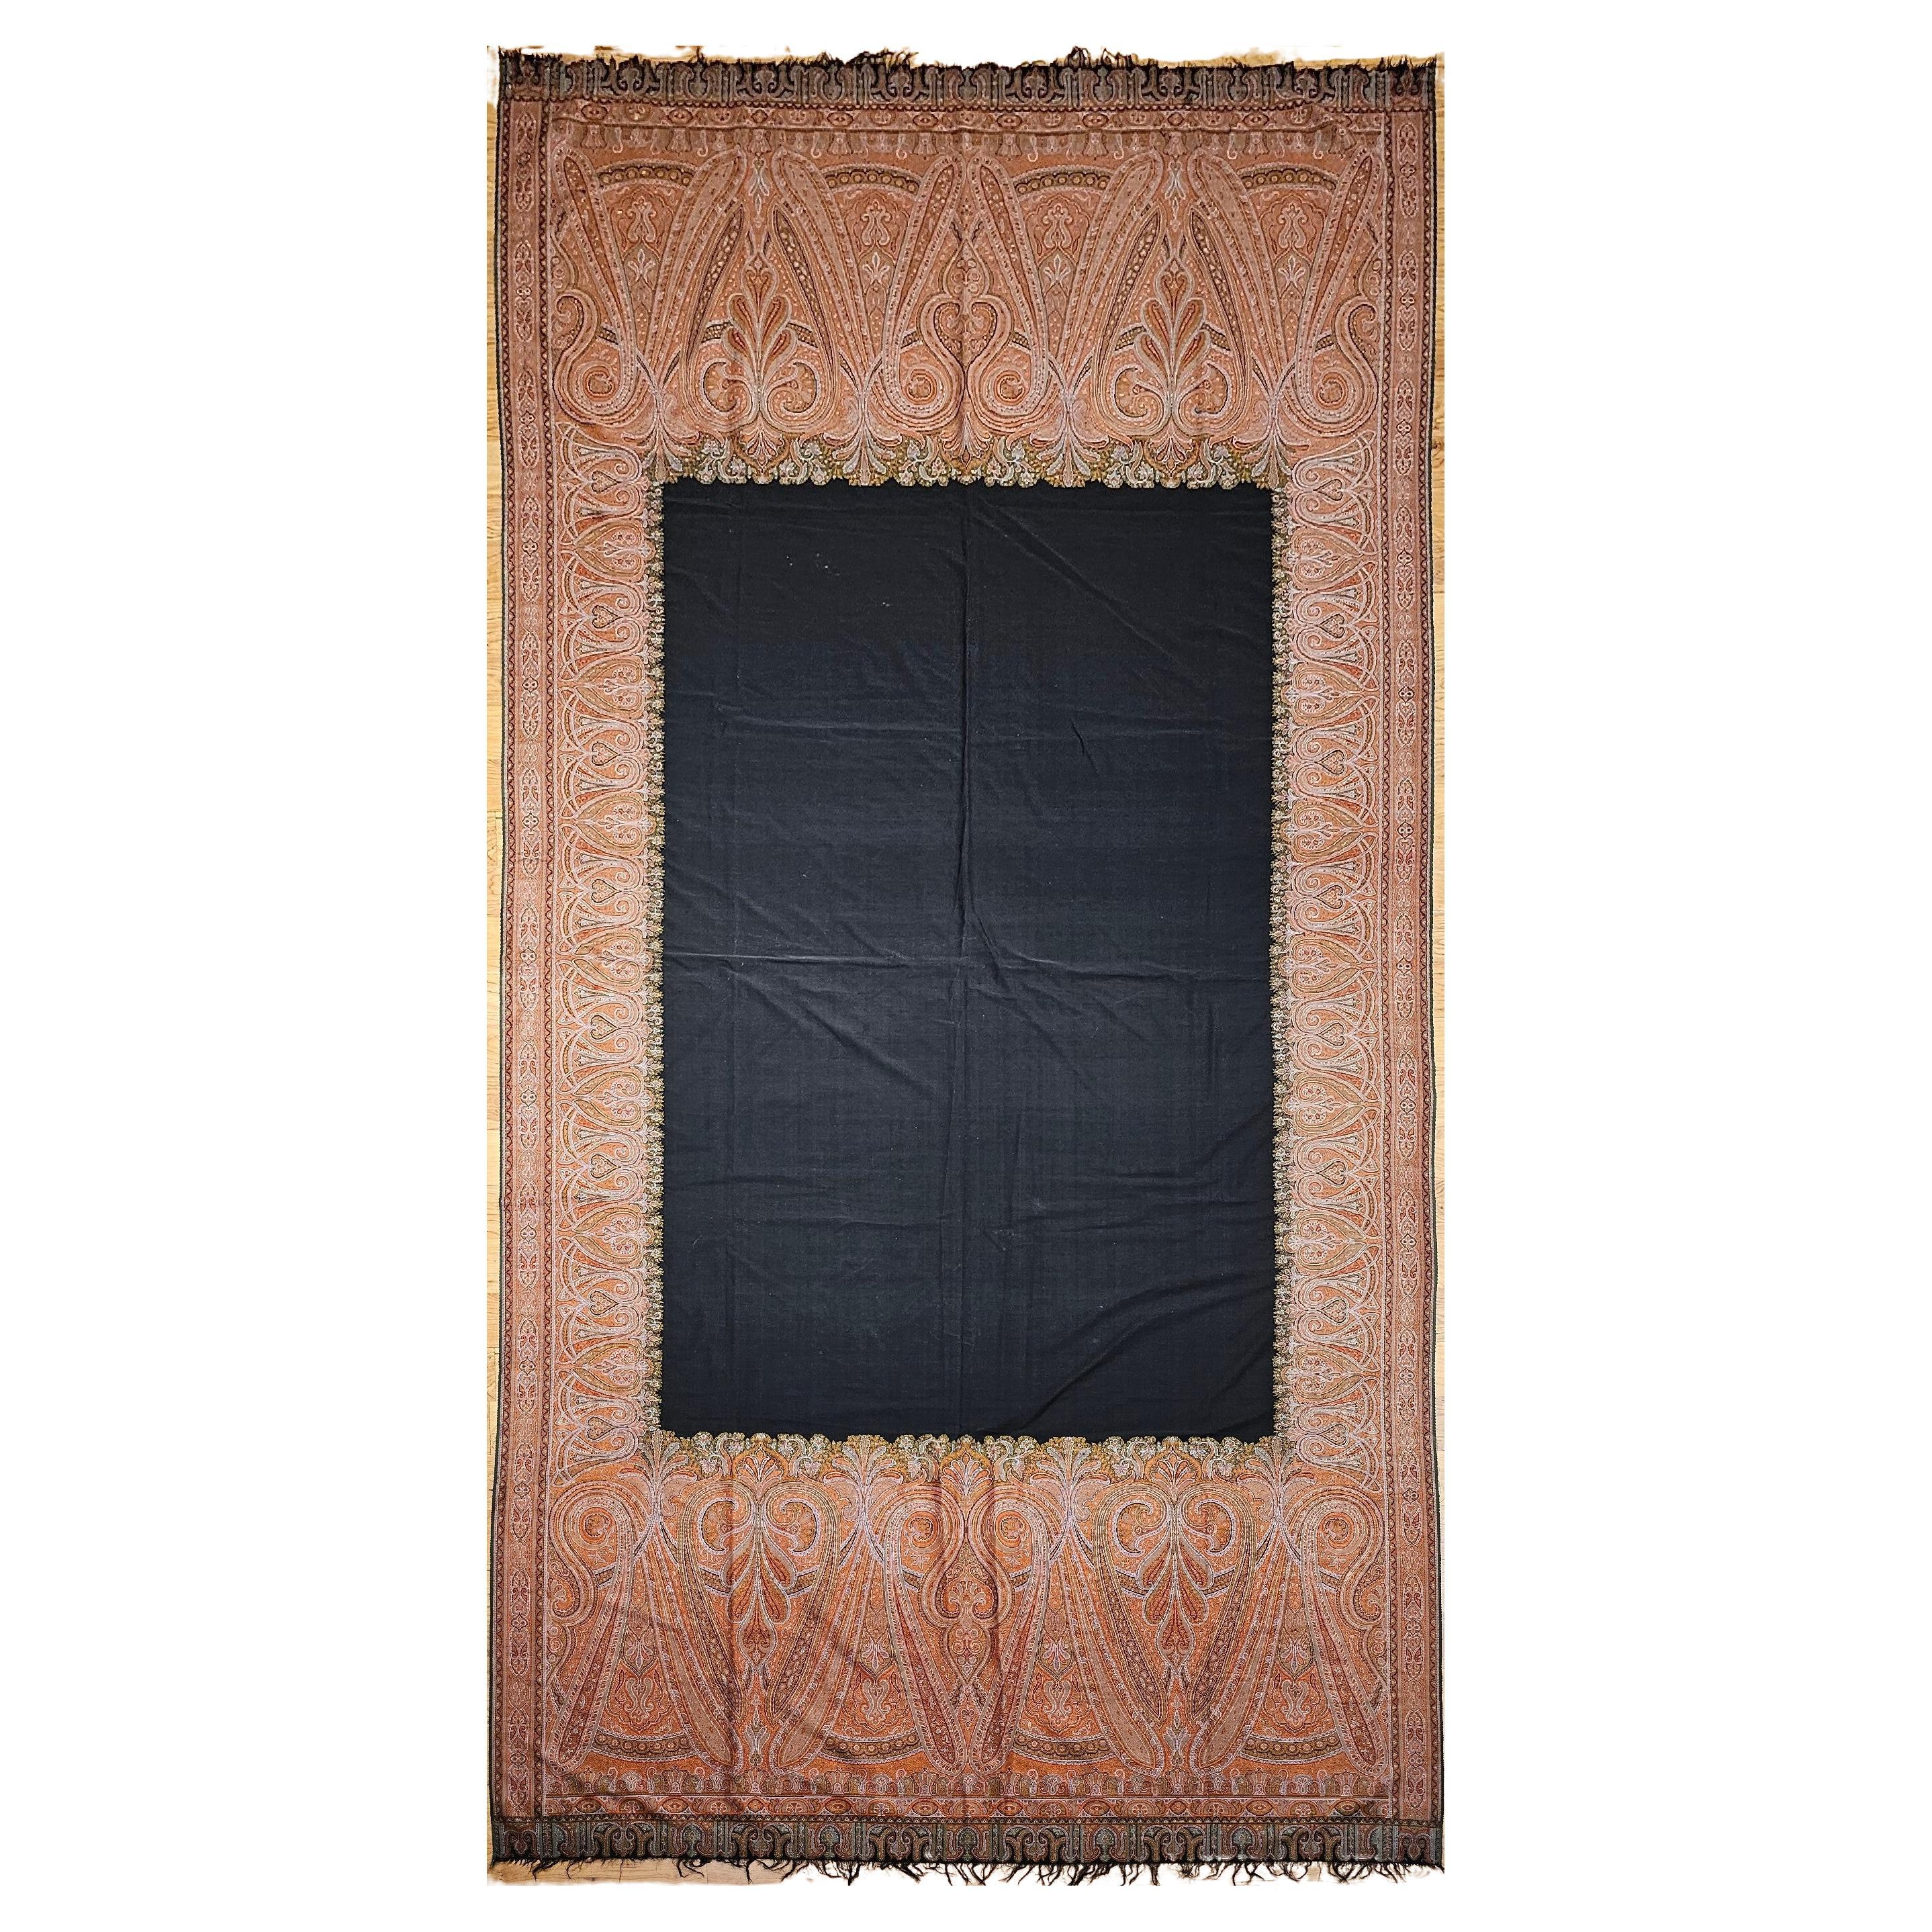 Handgewebter Kaschmiri-Paisley-Schal aus dem 19. Jahrhundert in Ziegelrot, Schwarz, Grün